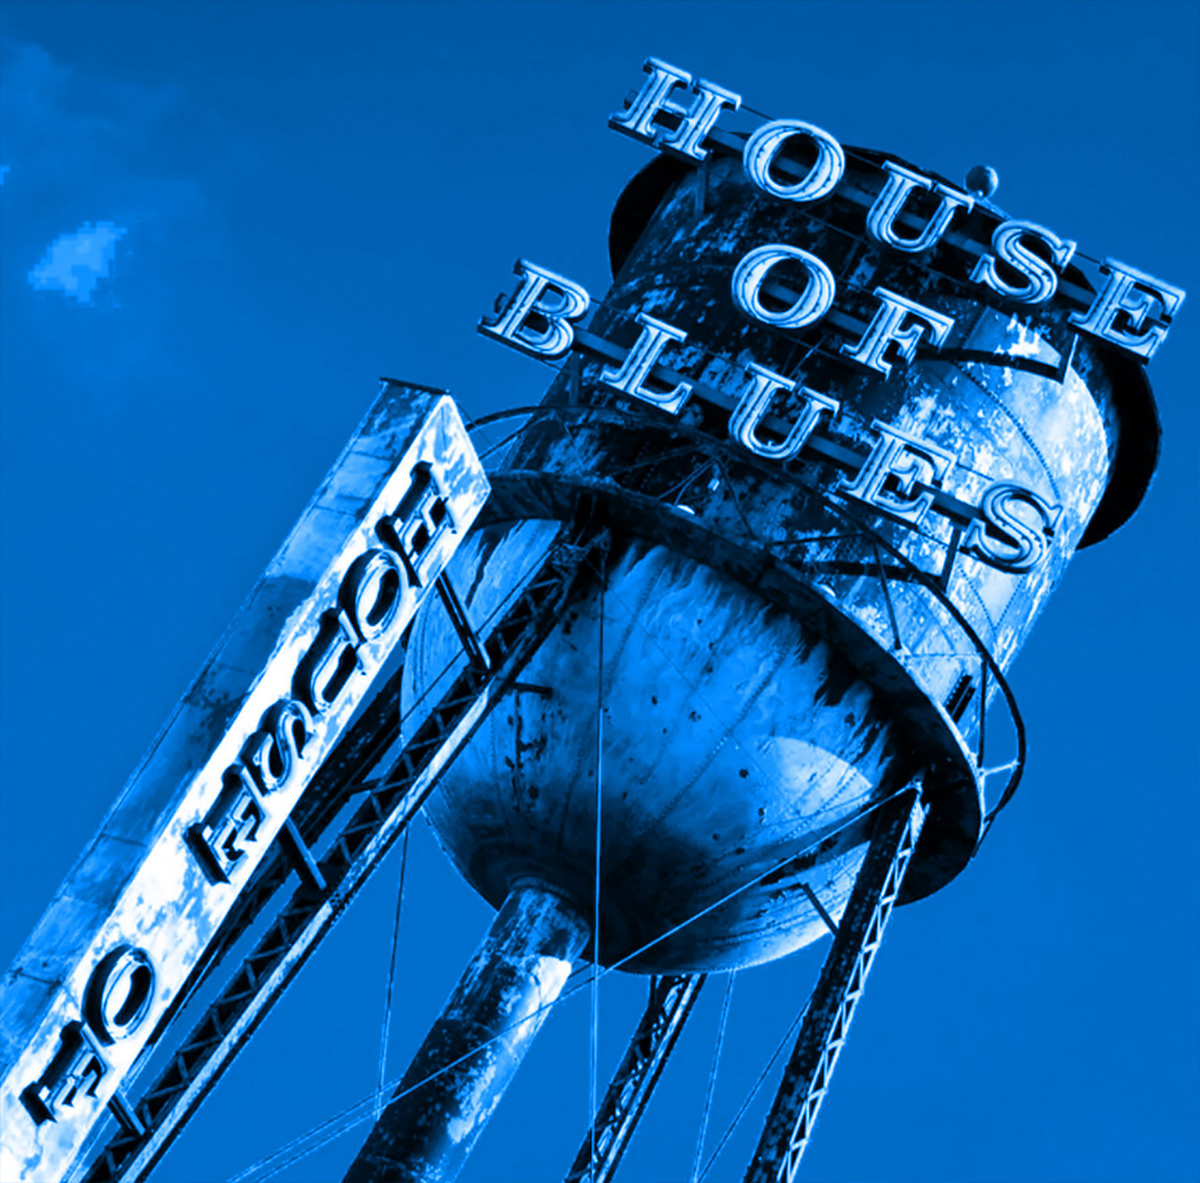 House of Blues, Disneyworld, Orlando